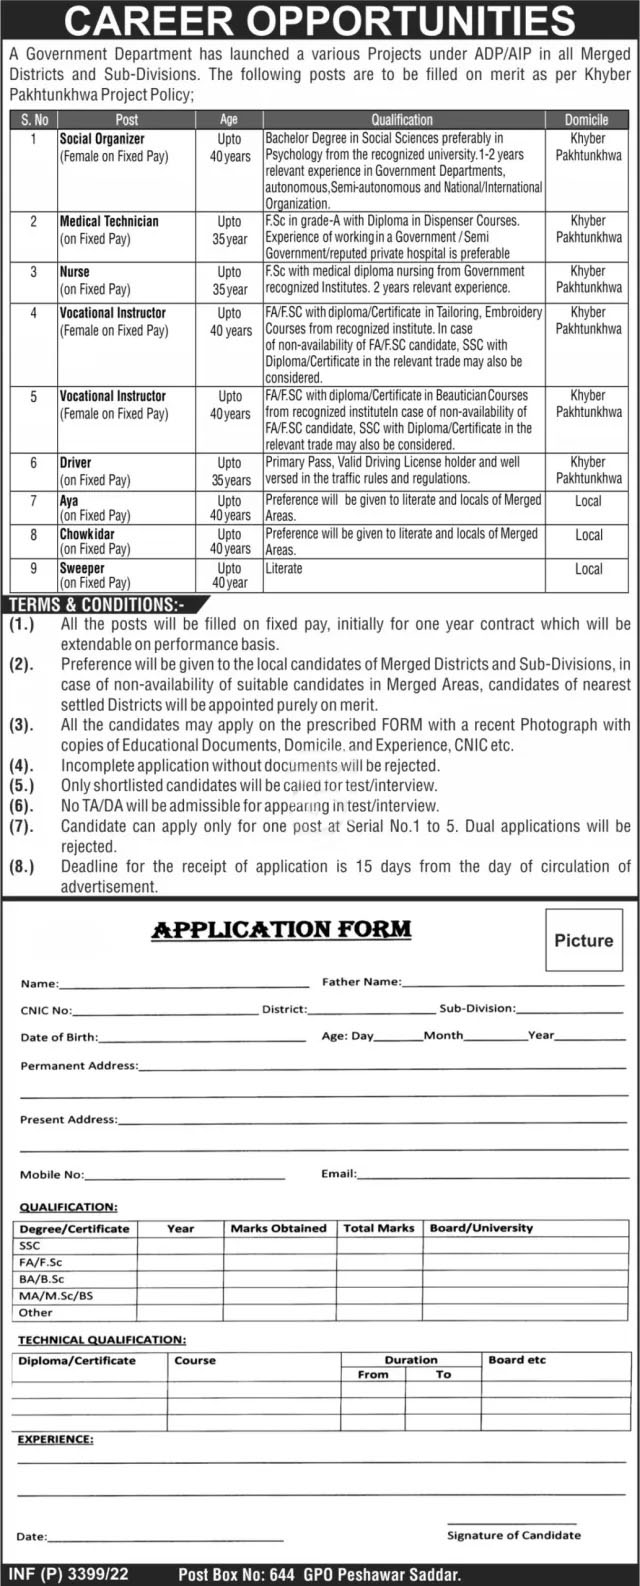 PO Box 644 Peshawar Jobs 2022 Advertisement Latest